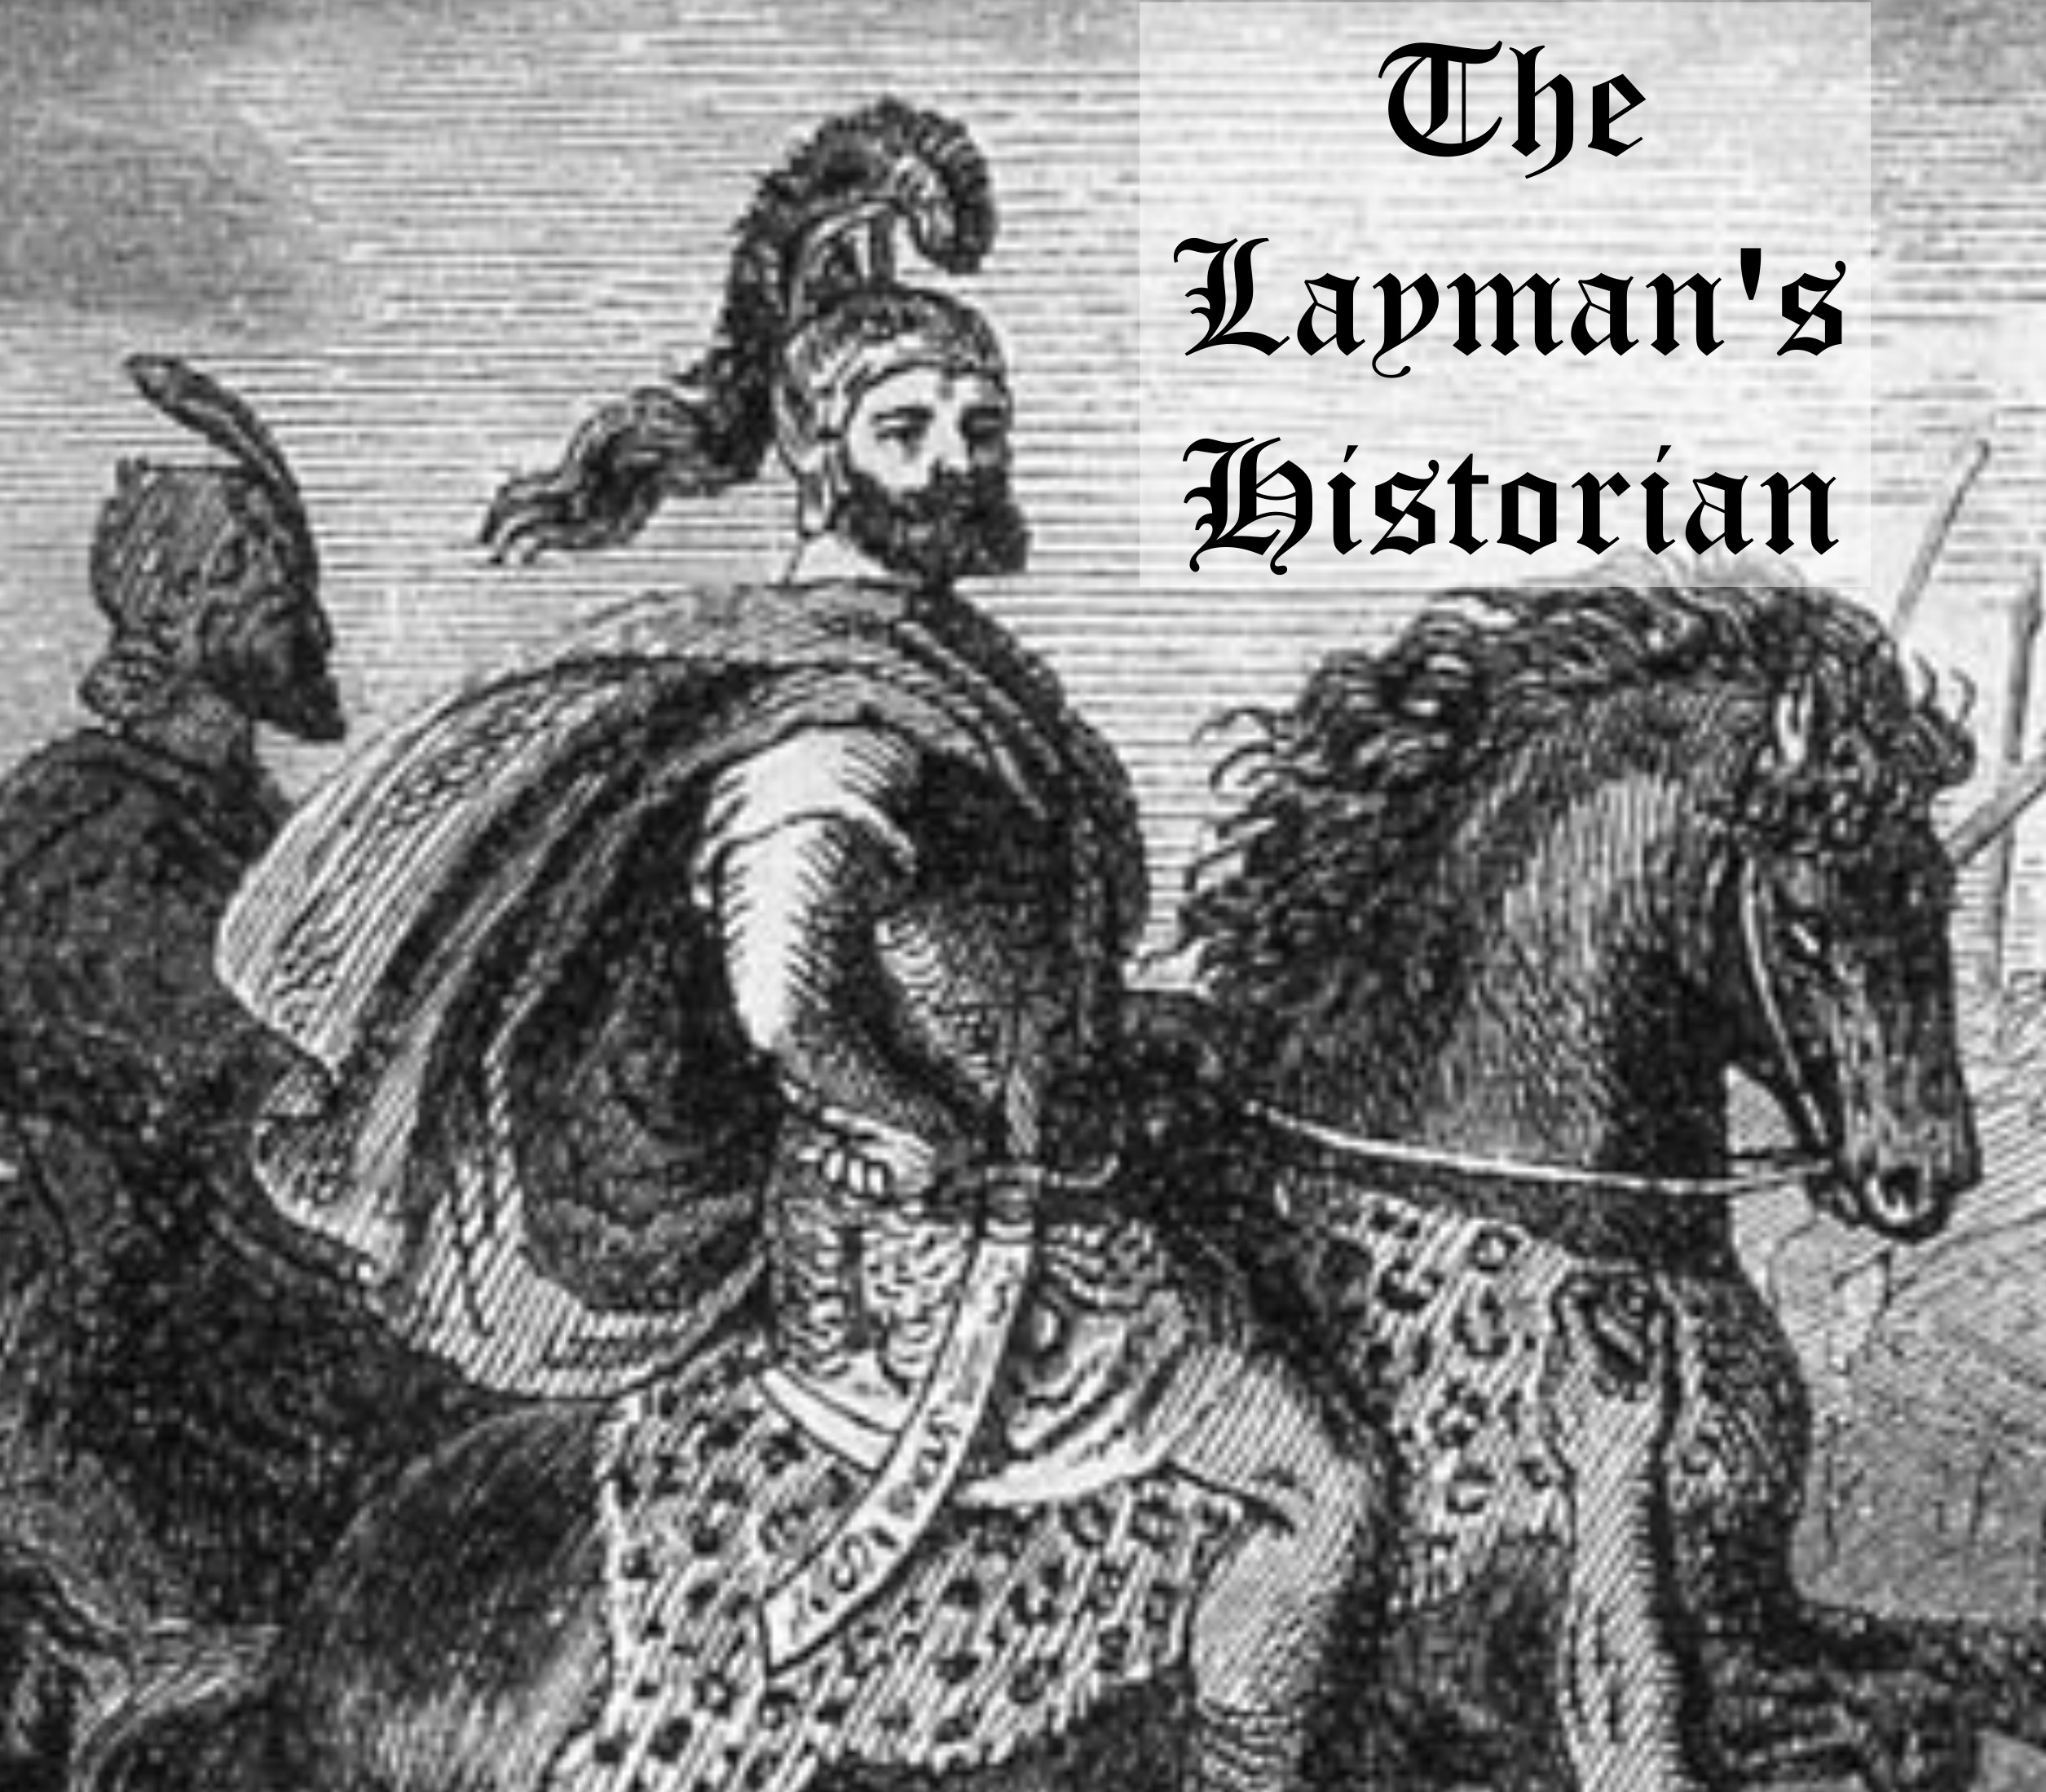 The Layman's Historian